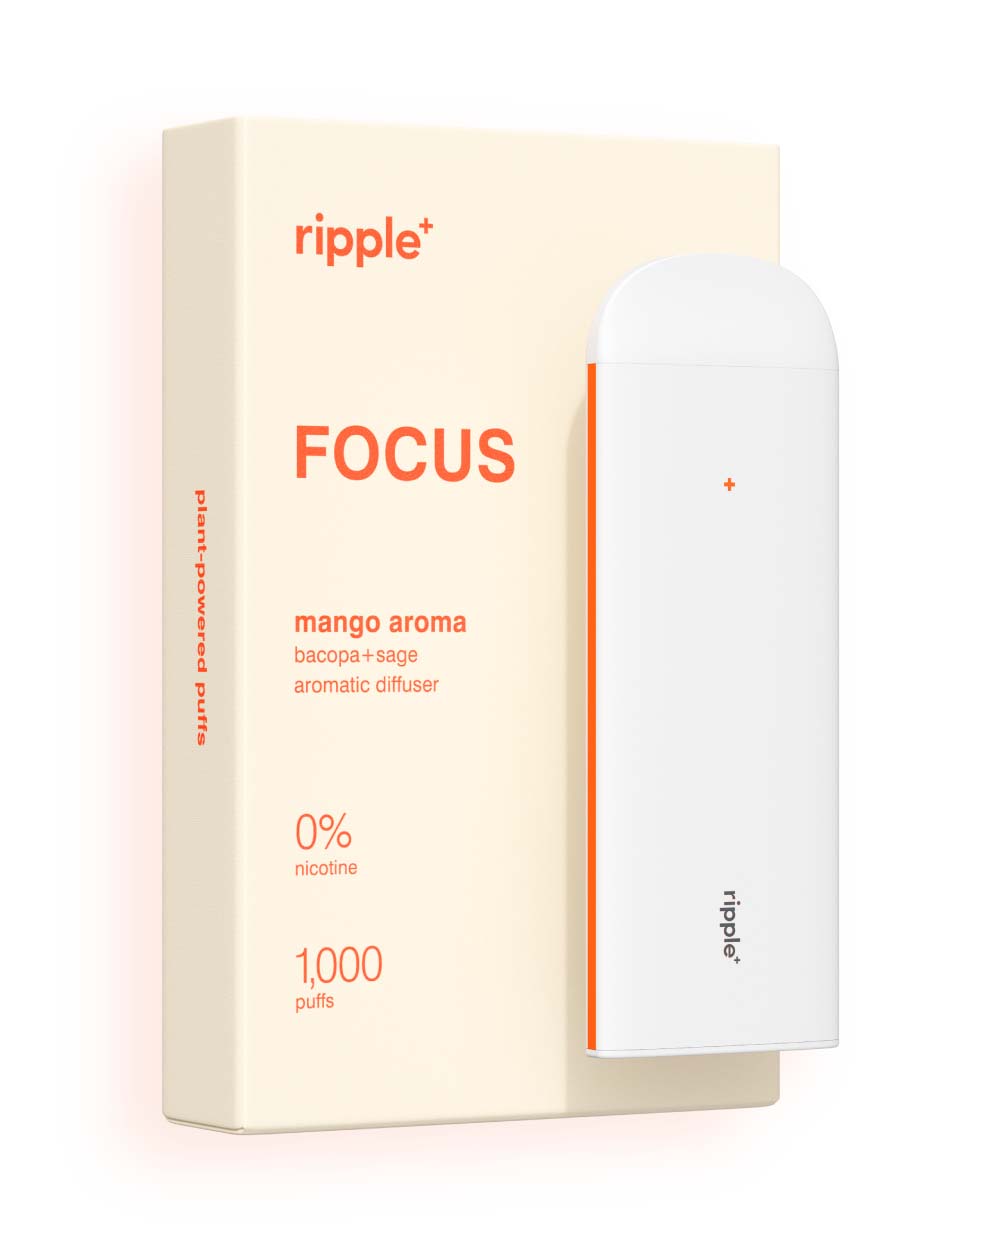 Ripple+ Focus vape in Mango Aroma flavor